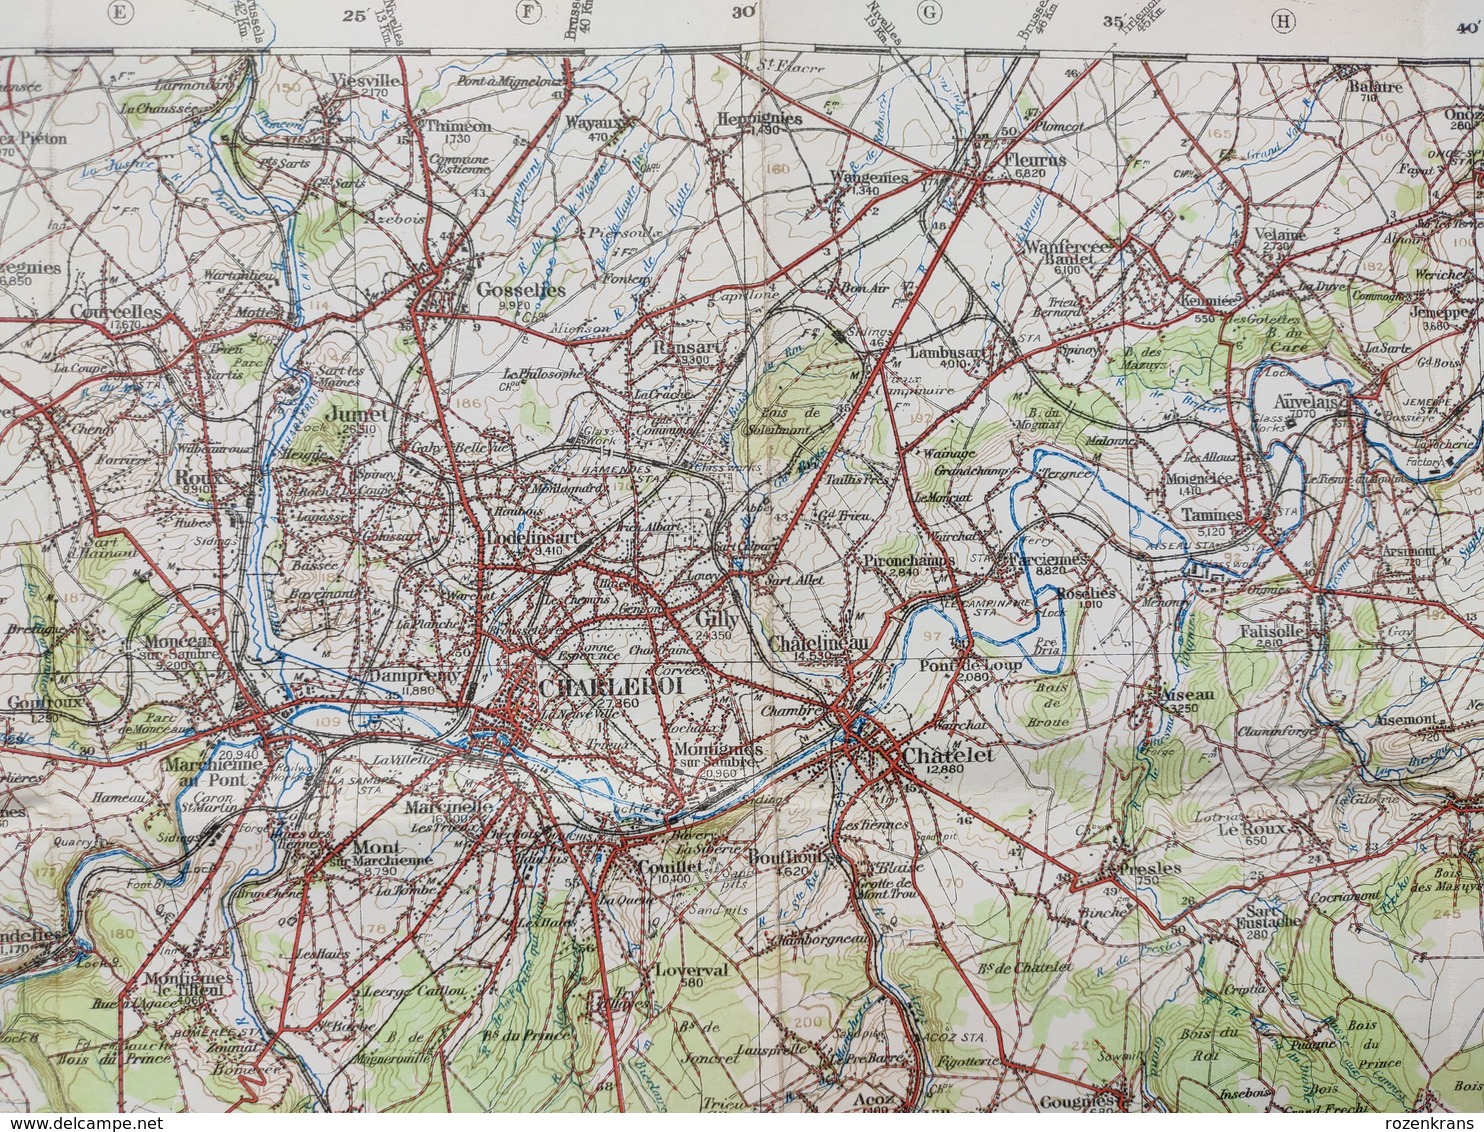 Carte Topographique Militaire UK War Office 1910 World War 1 WW1 Namur Phlippeville Florennes Charleroi Binche Chimay Gi - Cartes Topographiques